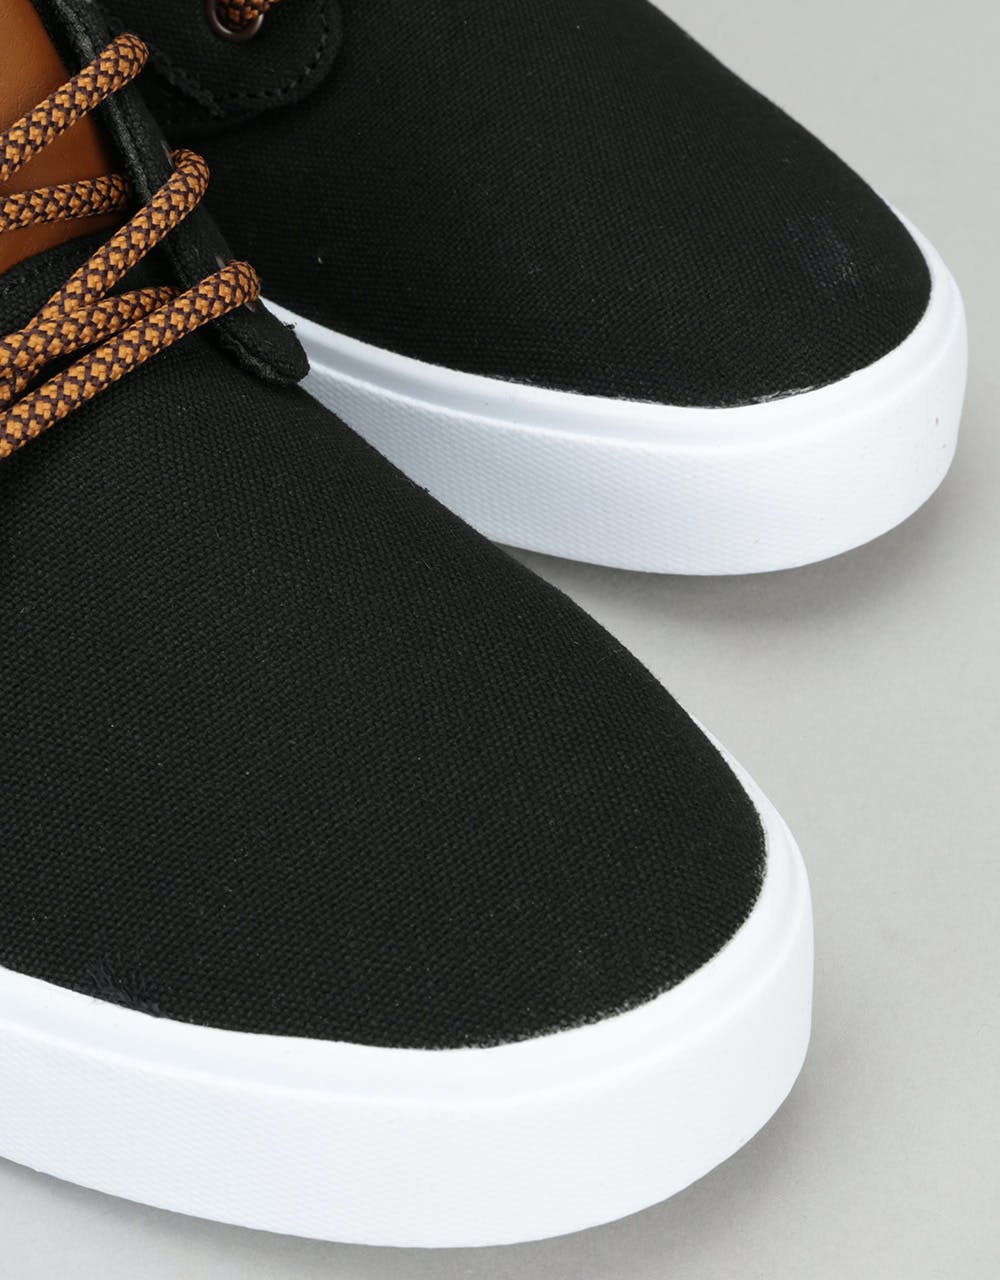 Etnies Jameson 2 ECO Skate Shoes - Black/Raw